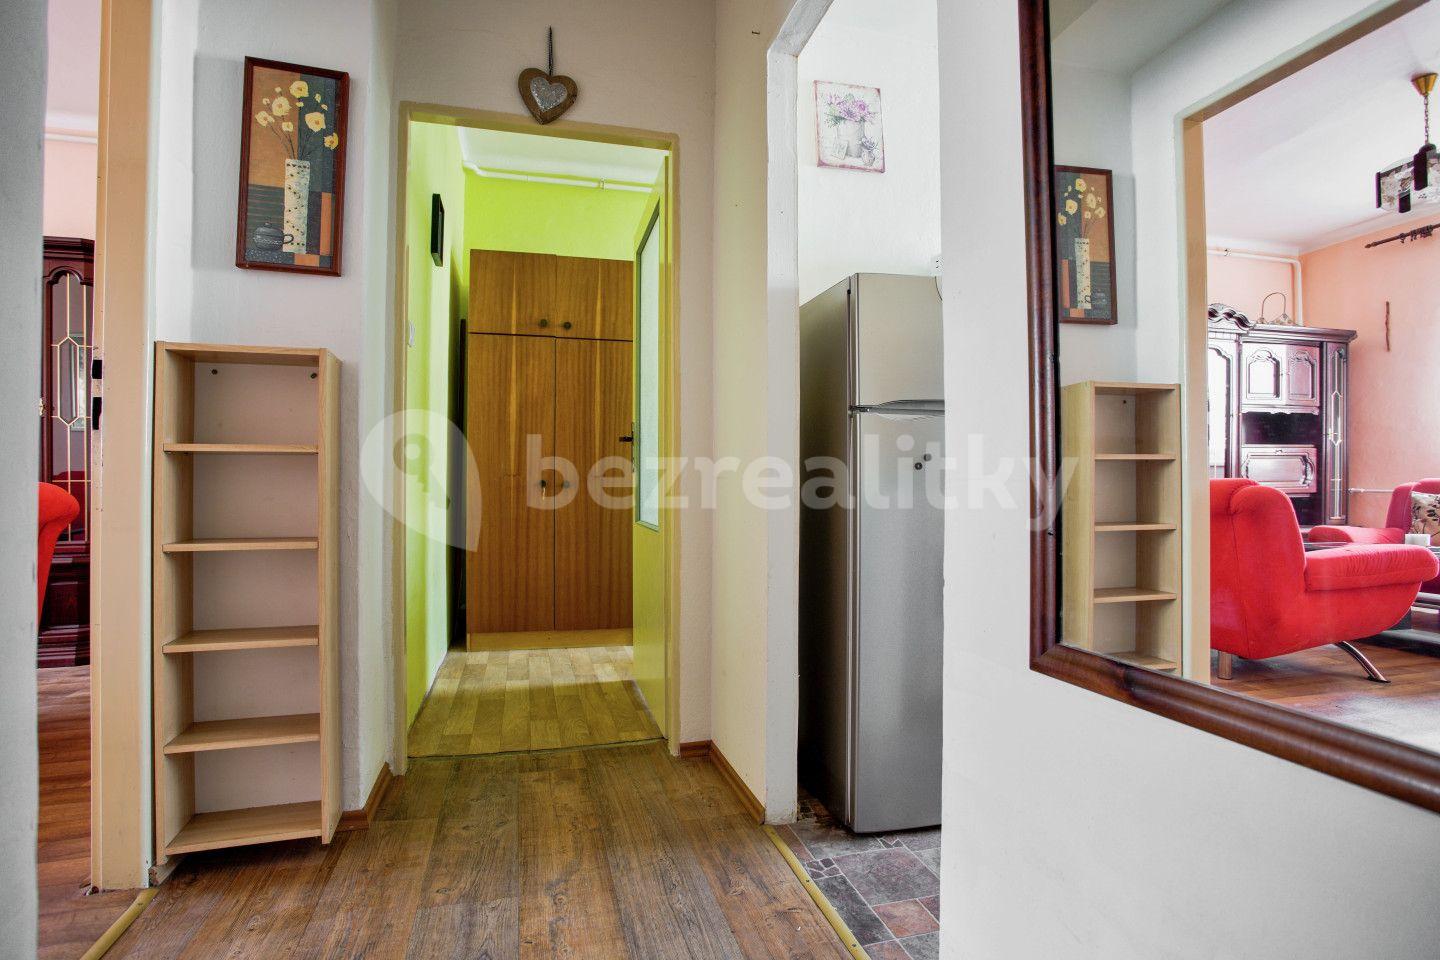 2 bedroom flat for sale, 52 m², Kolonie, Křešice, Ústecký Region